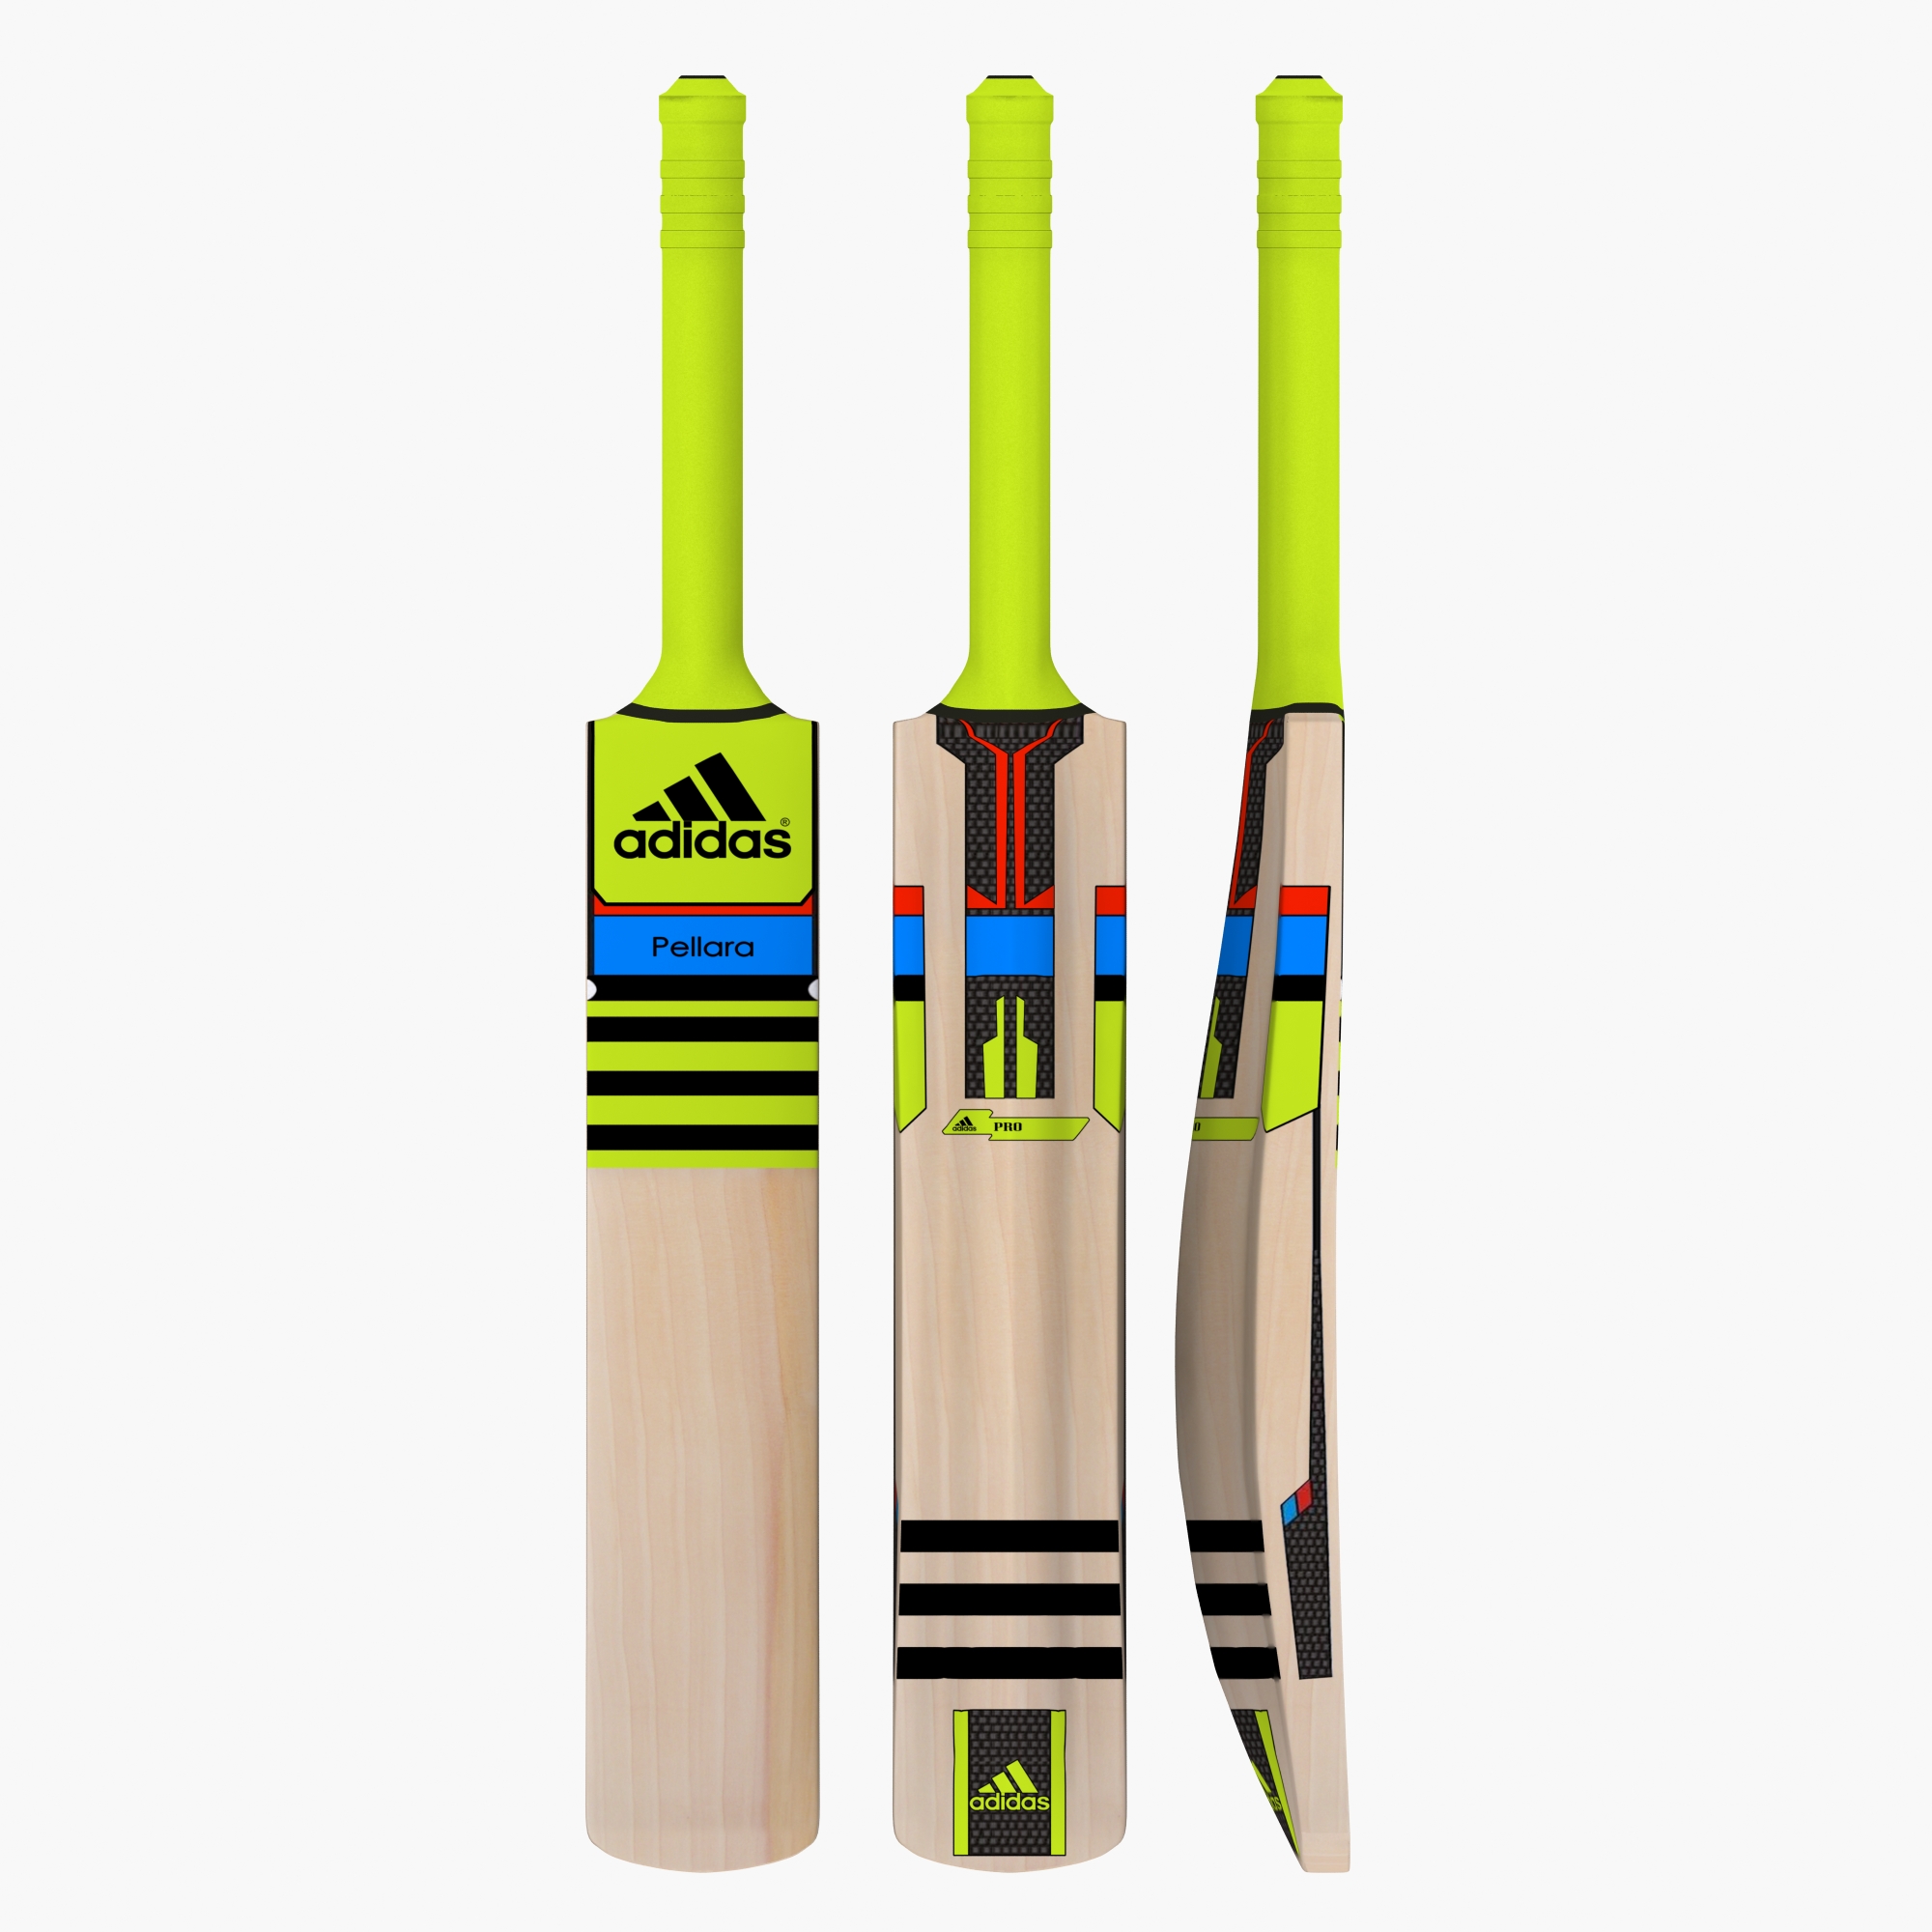 Adidas Pellara Cricket Bat by Polygon3d 